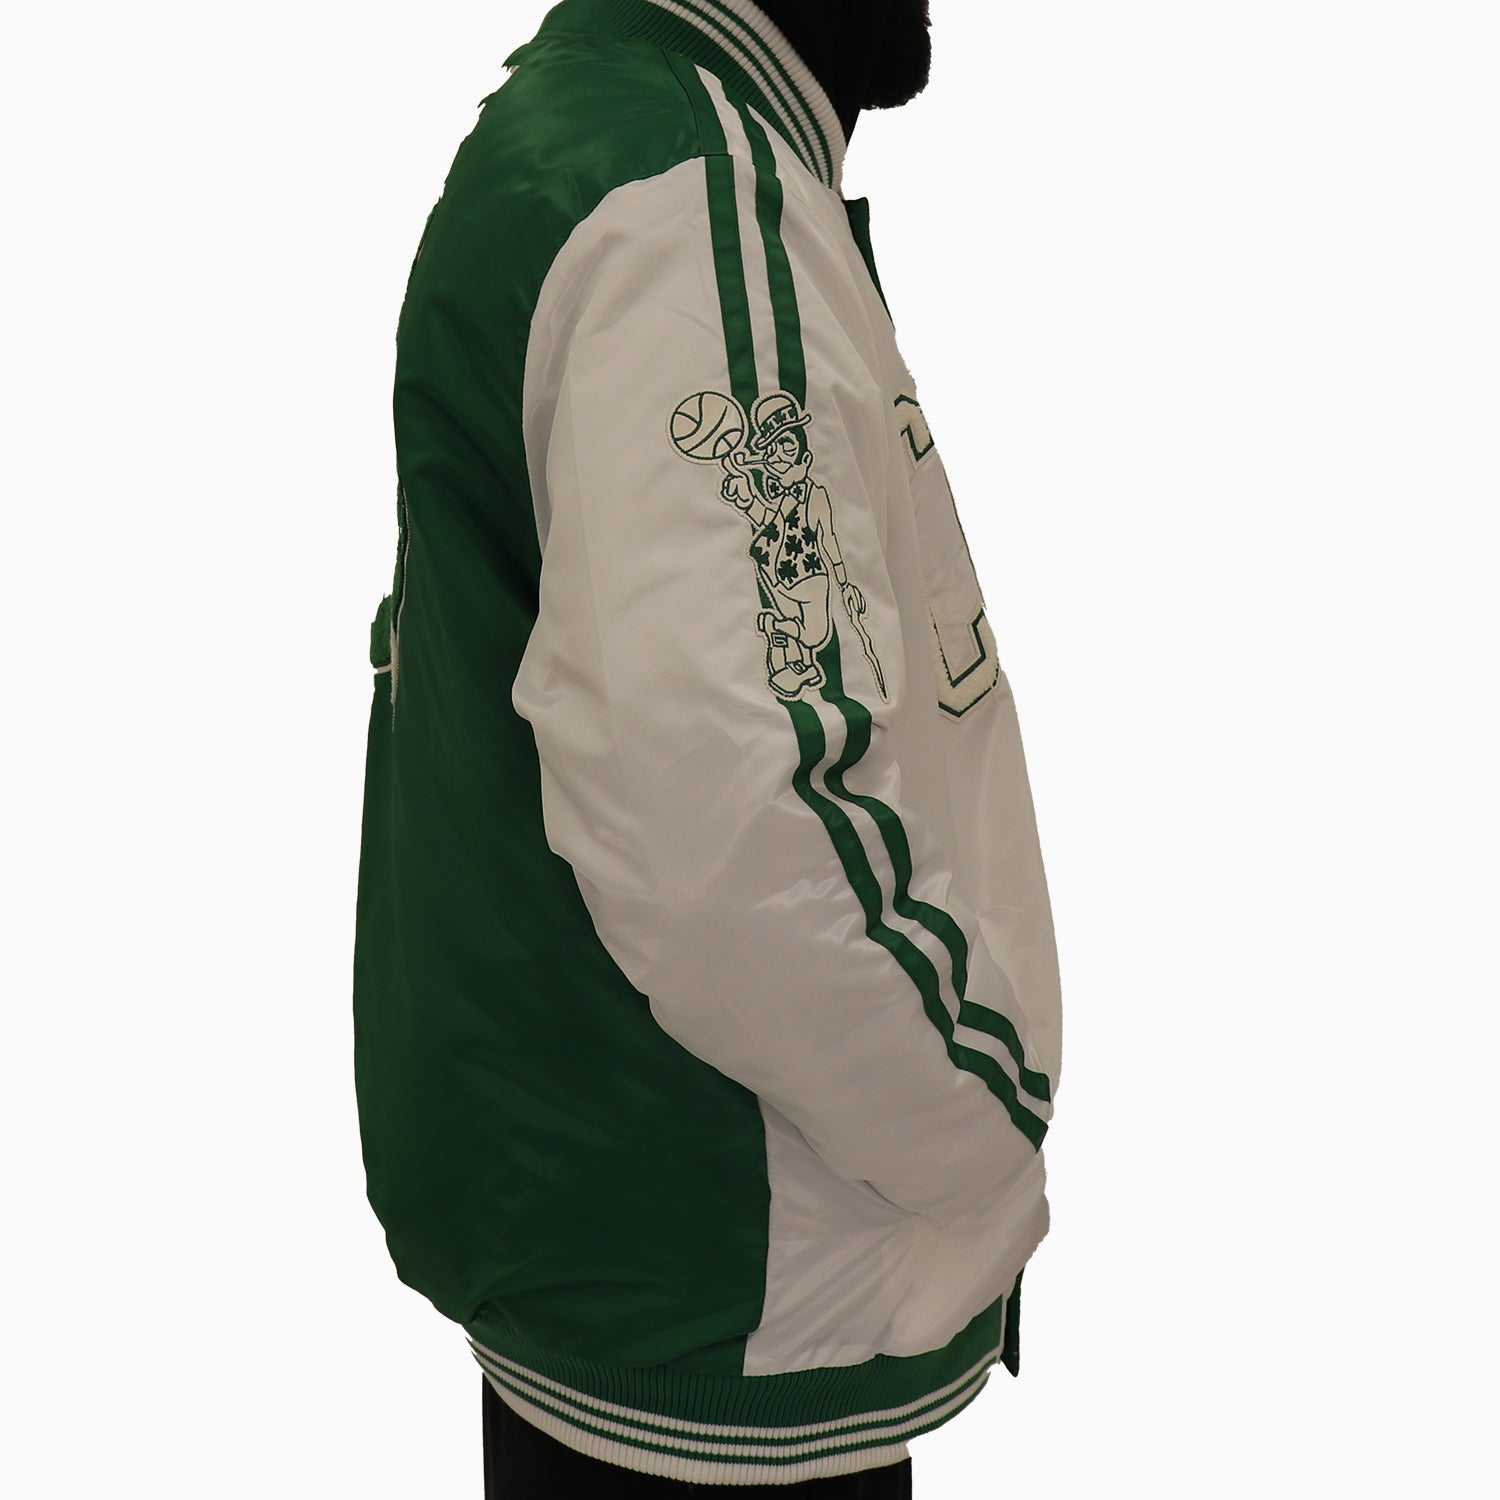 Starter Men's Boston Celtics NBA Varsity Satin Jacket - Color: Green - Tops and Bottoms USA -